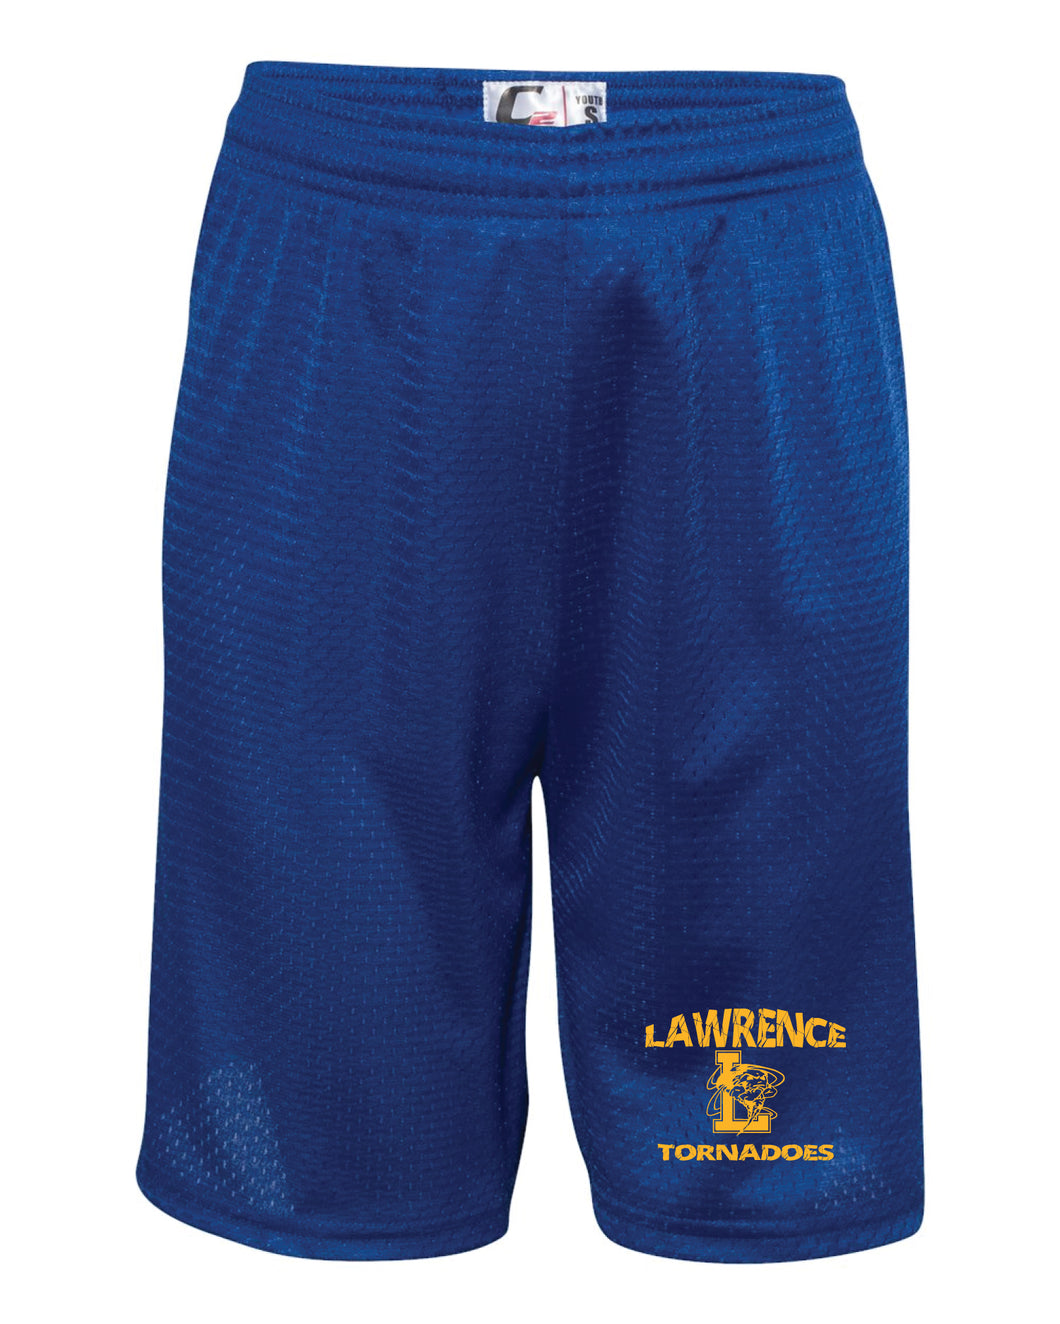 Lawrence HS Tech Shorts - Royal Blue - 5KounT